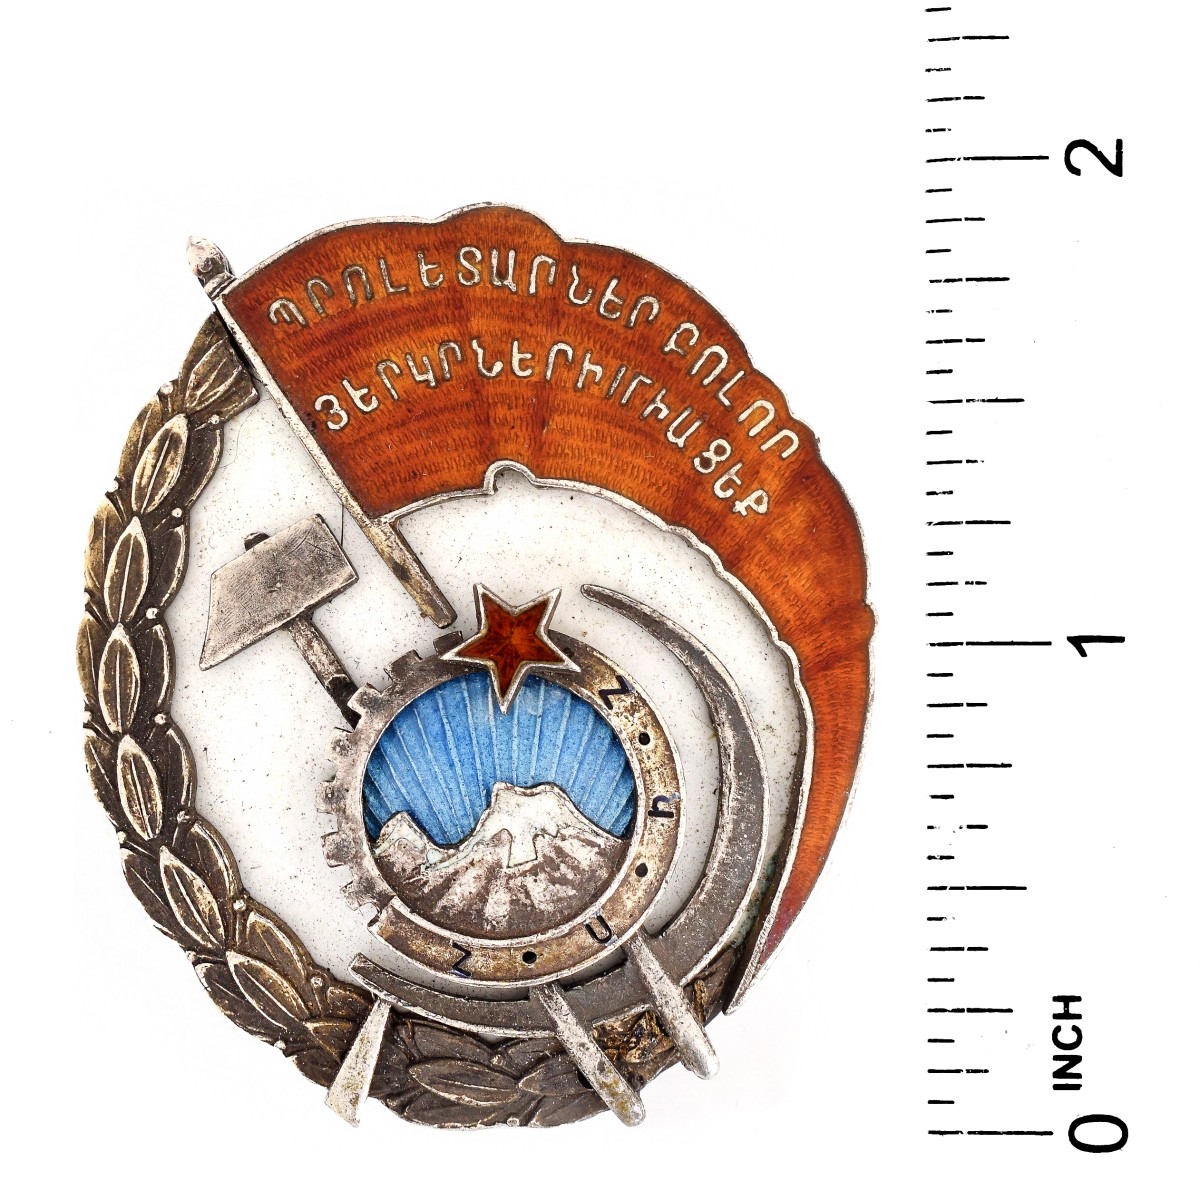 Russian-Armenian Silver & Enamel Badge